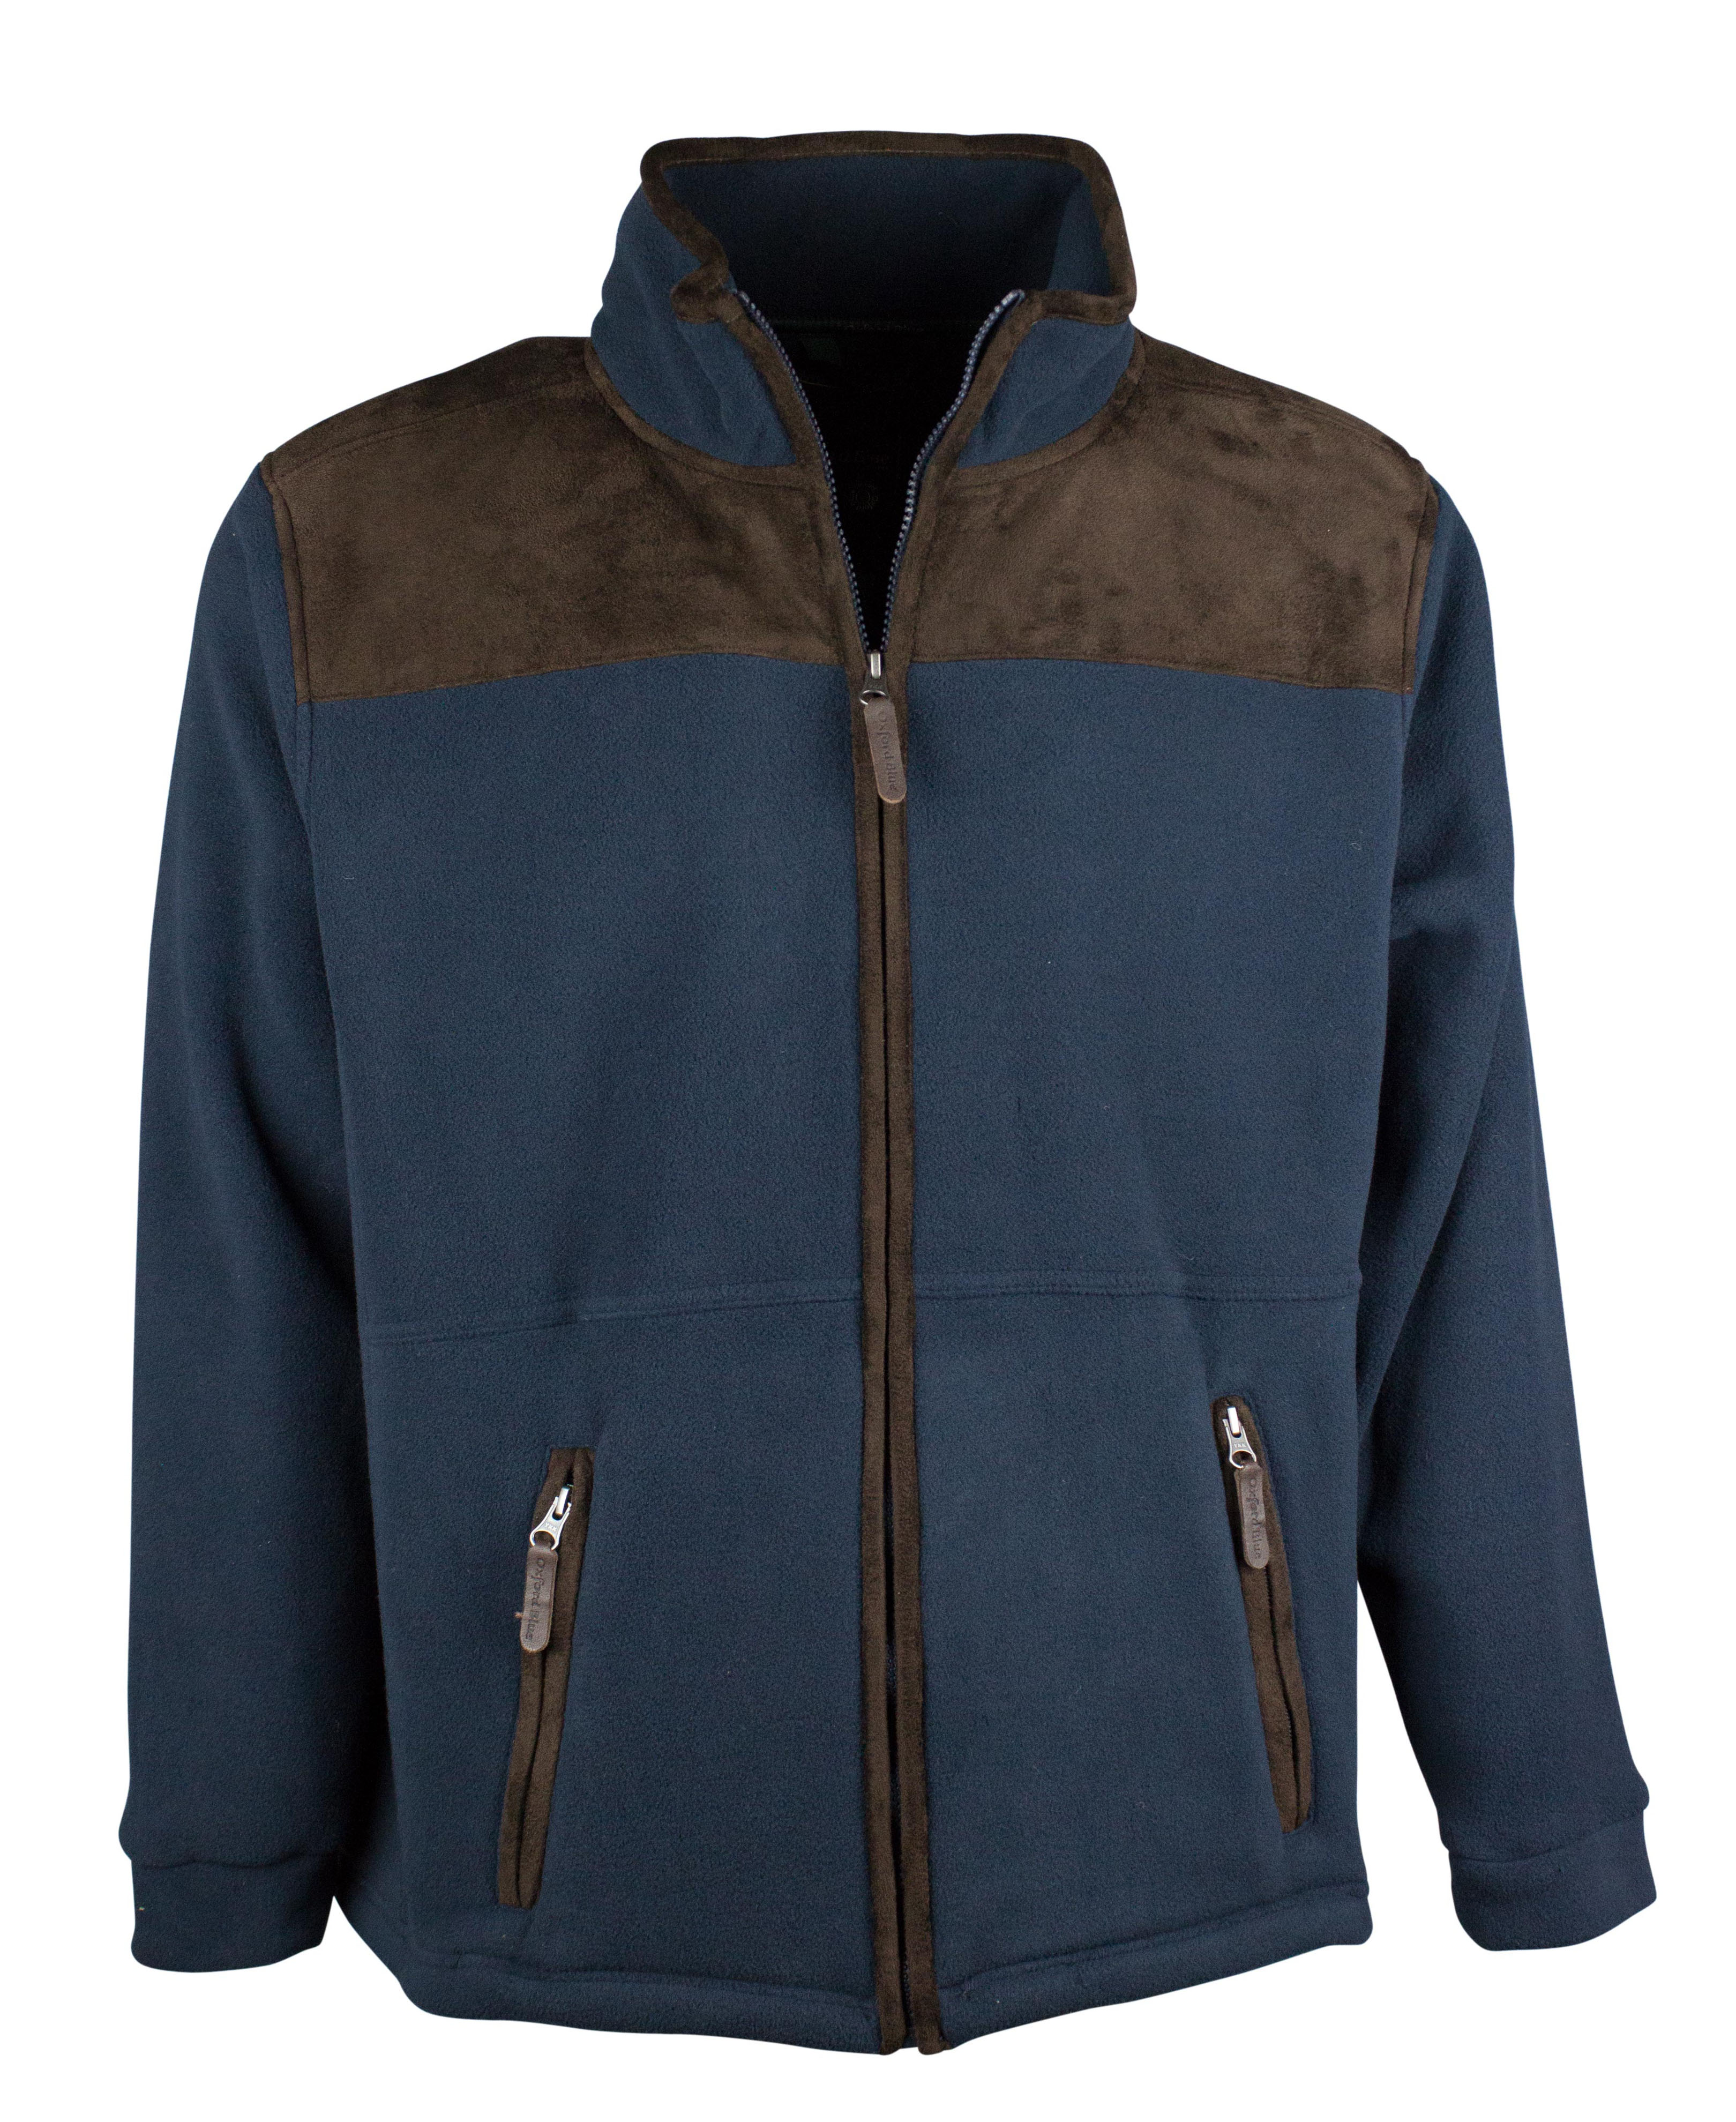 MF105 - Mens Bonded Full Zip Fleece Jacket - NAVY - Oxford Blue